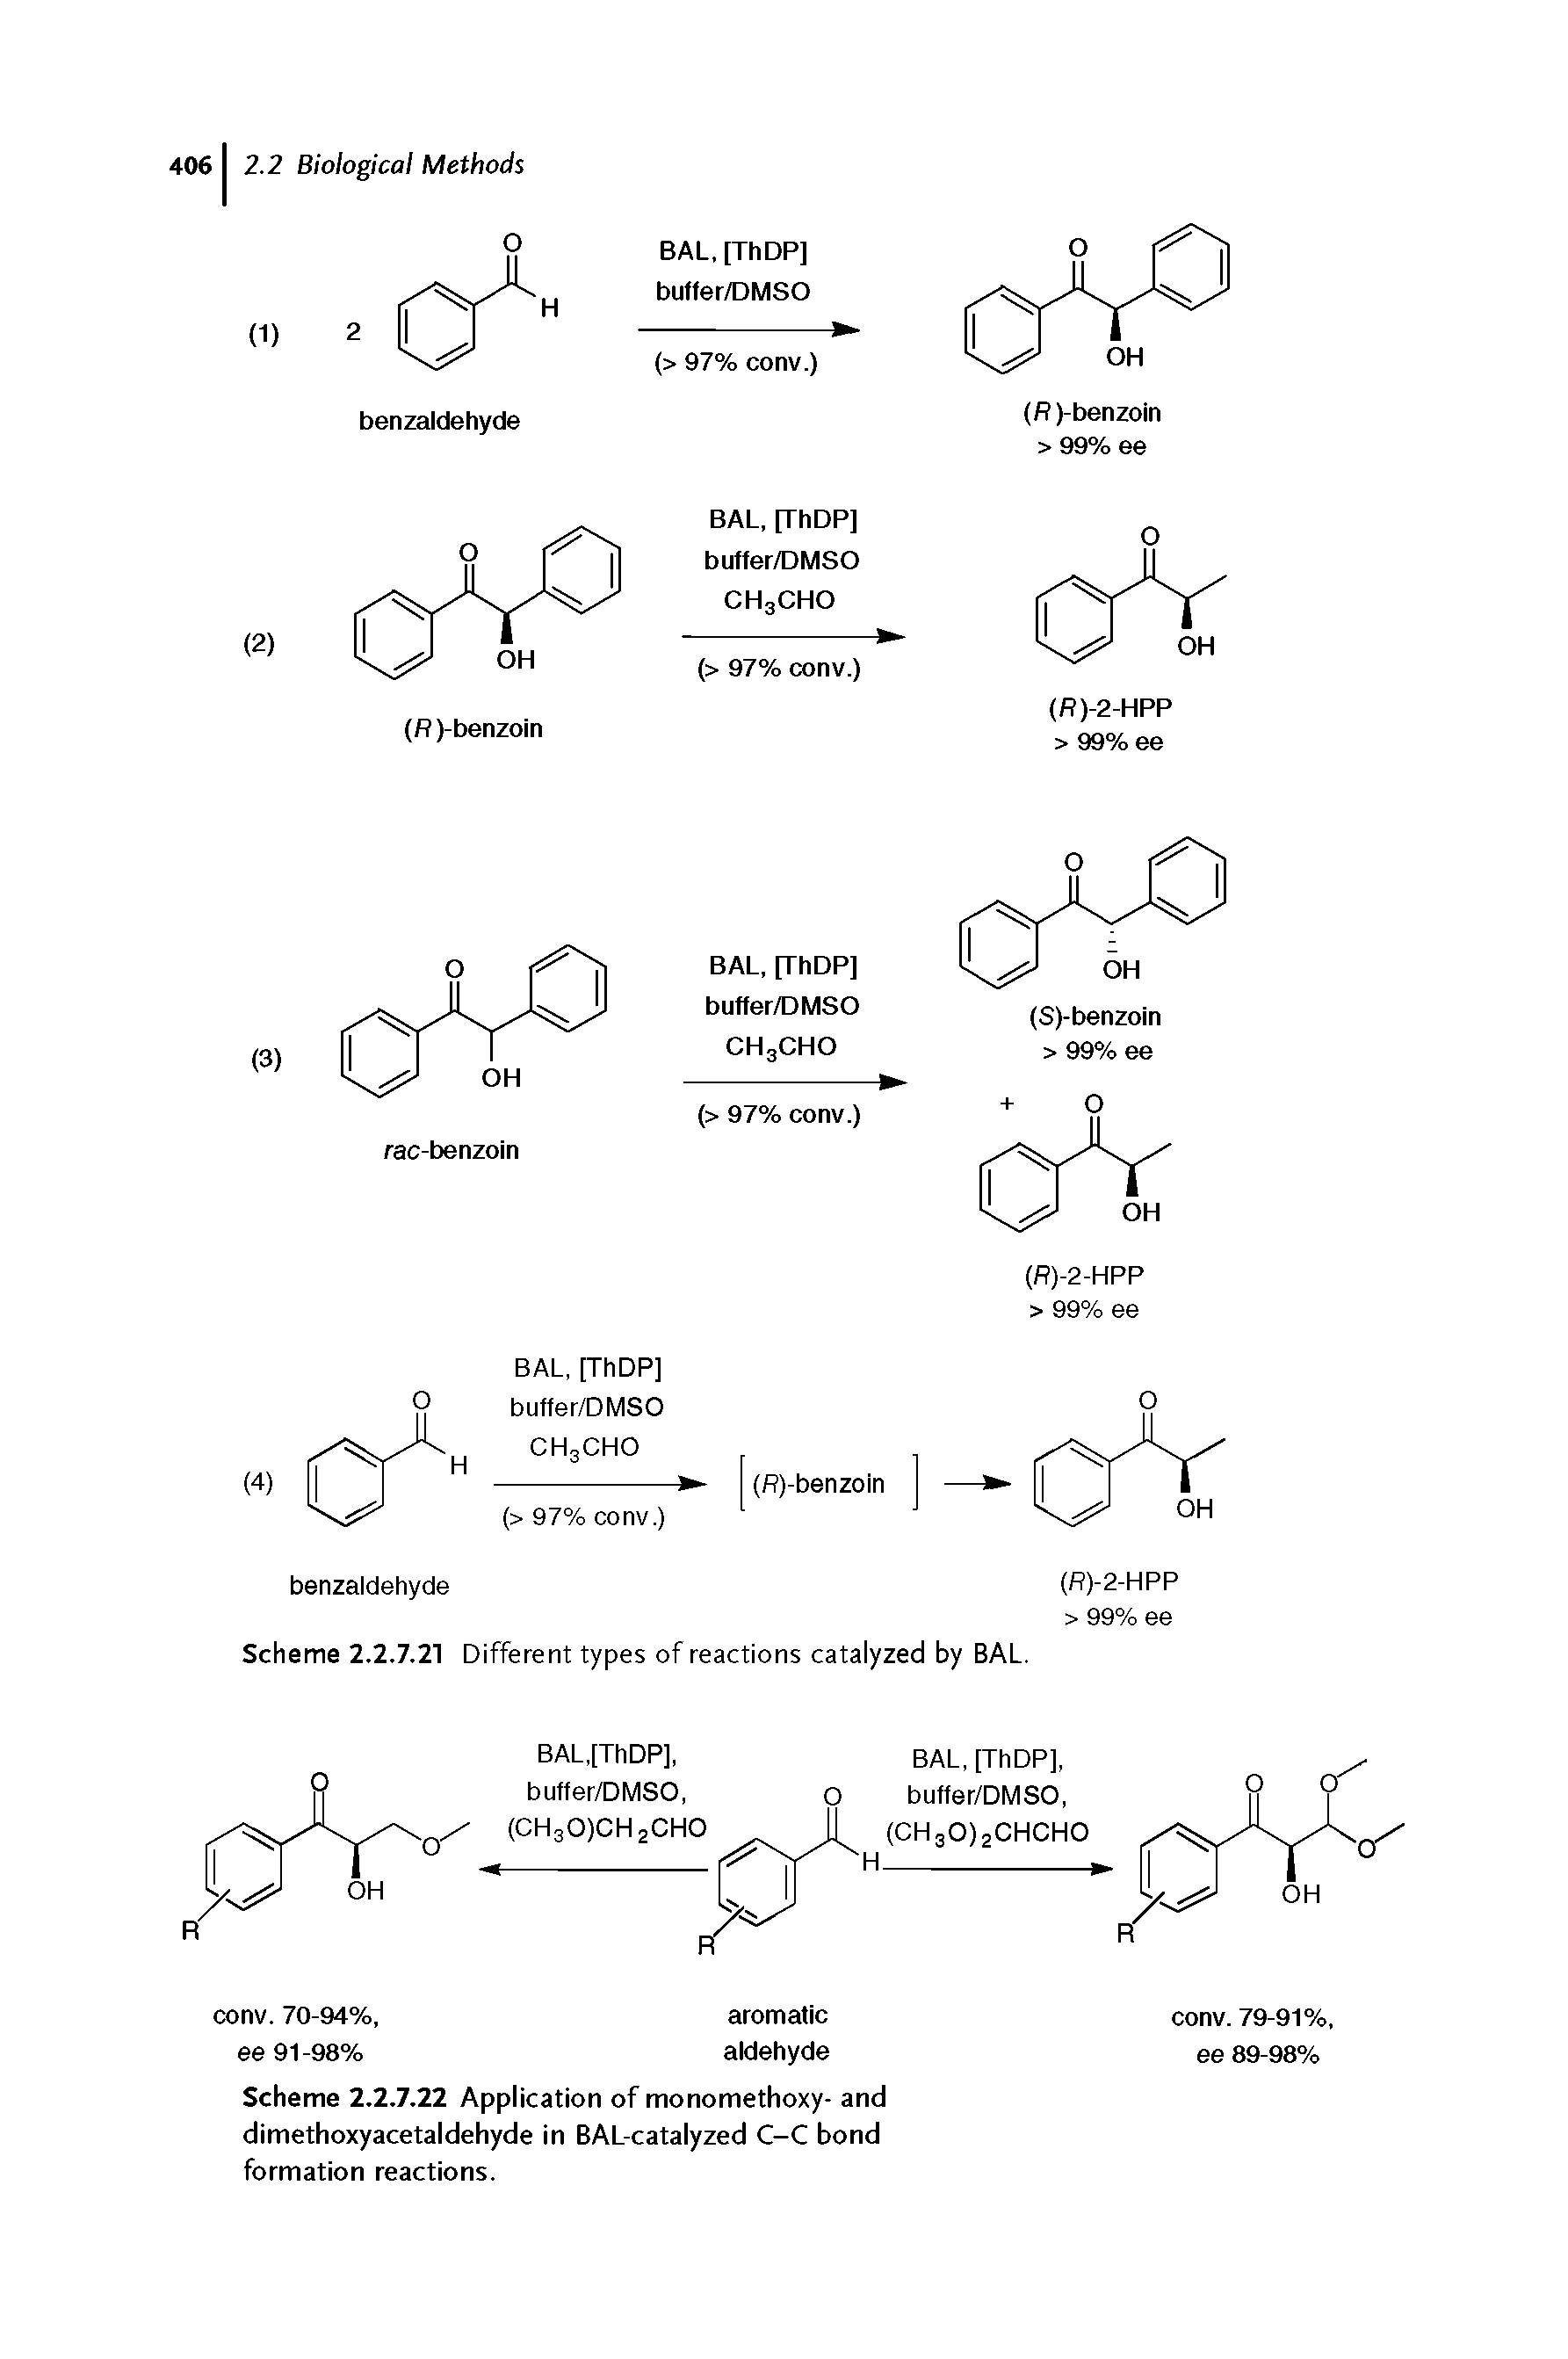 Scheme 2.2.7.22 Application of monomethoxy- and dimethoxyacetaldehyde in BAL-catalyzed C-C bond formation reactions.